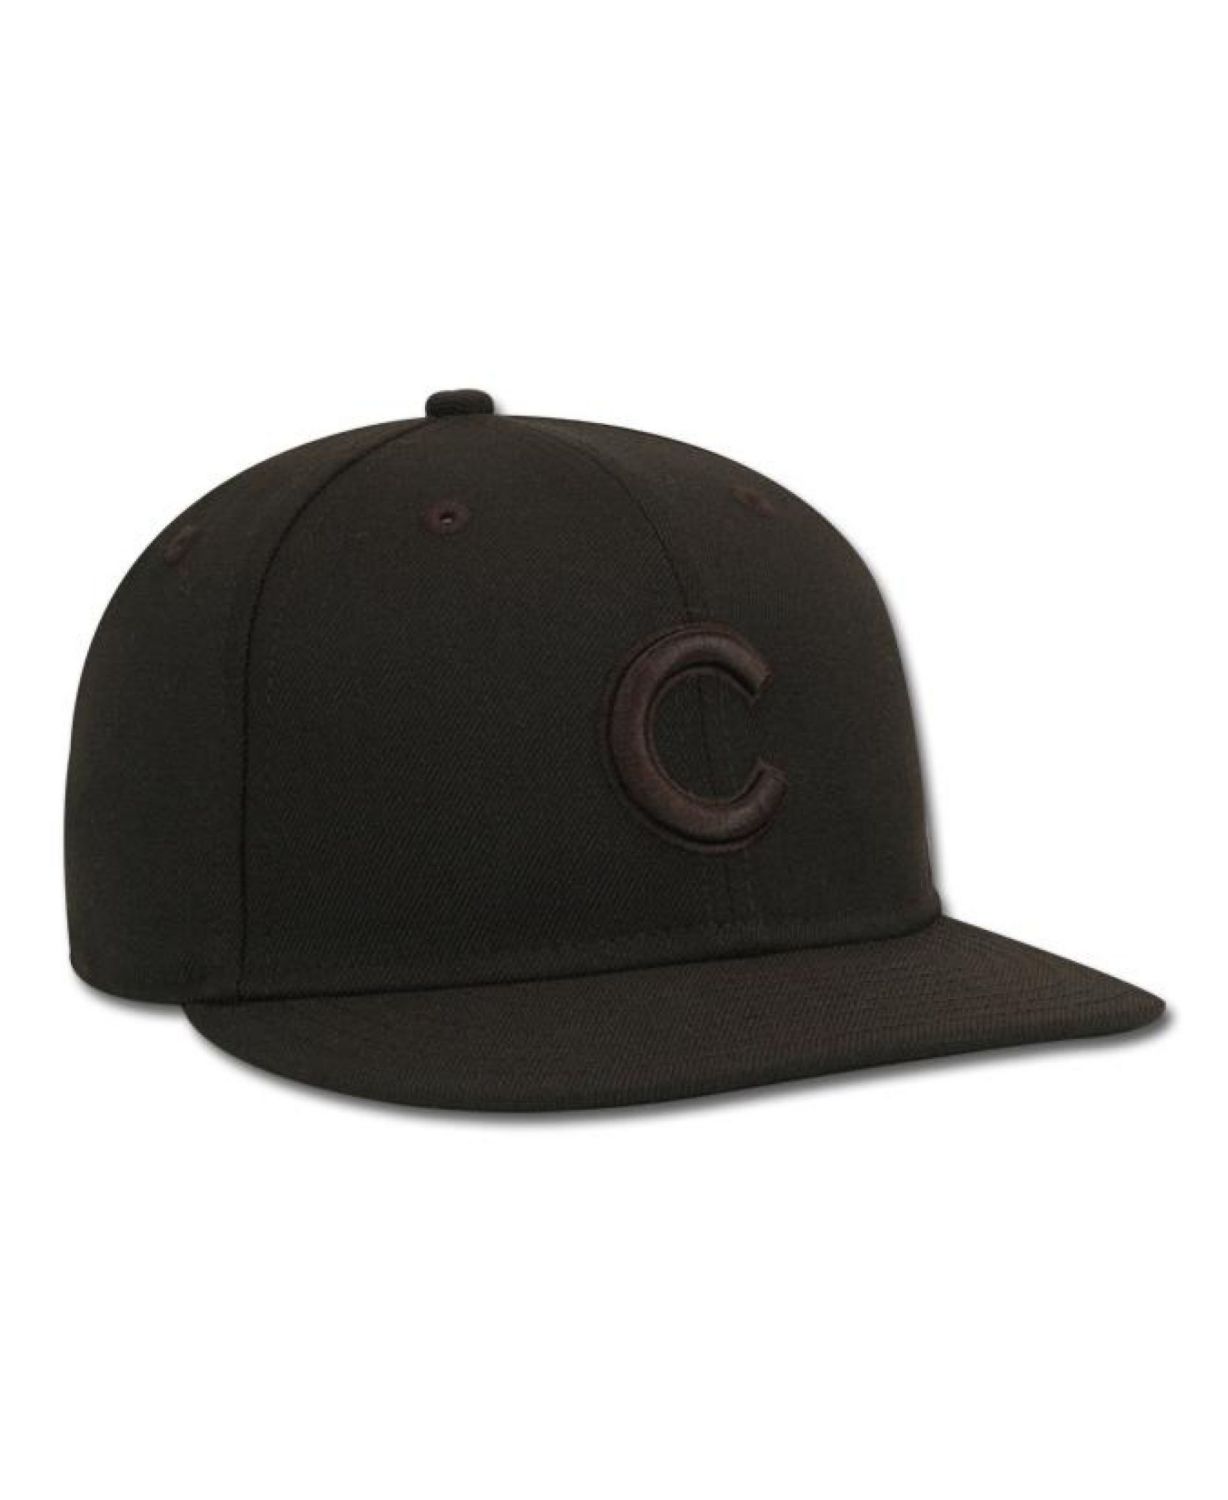 New Era Kids' Chicago Cubs MLB Black on Black Fashion 59FIFTY Cap & Reviews - Sports Fan Shop By Lids - Men - Macy's